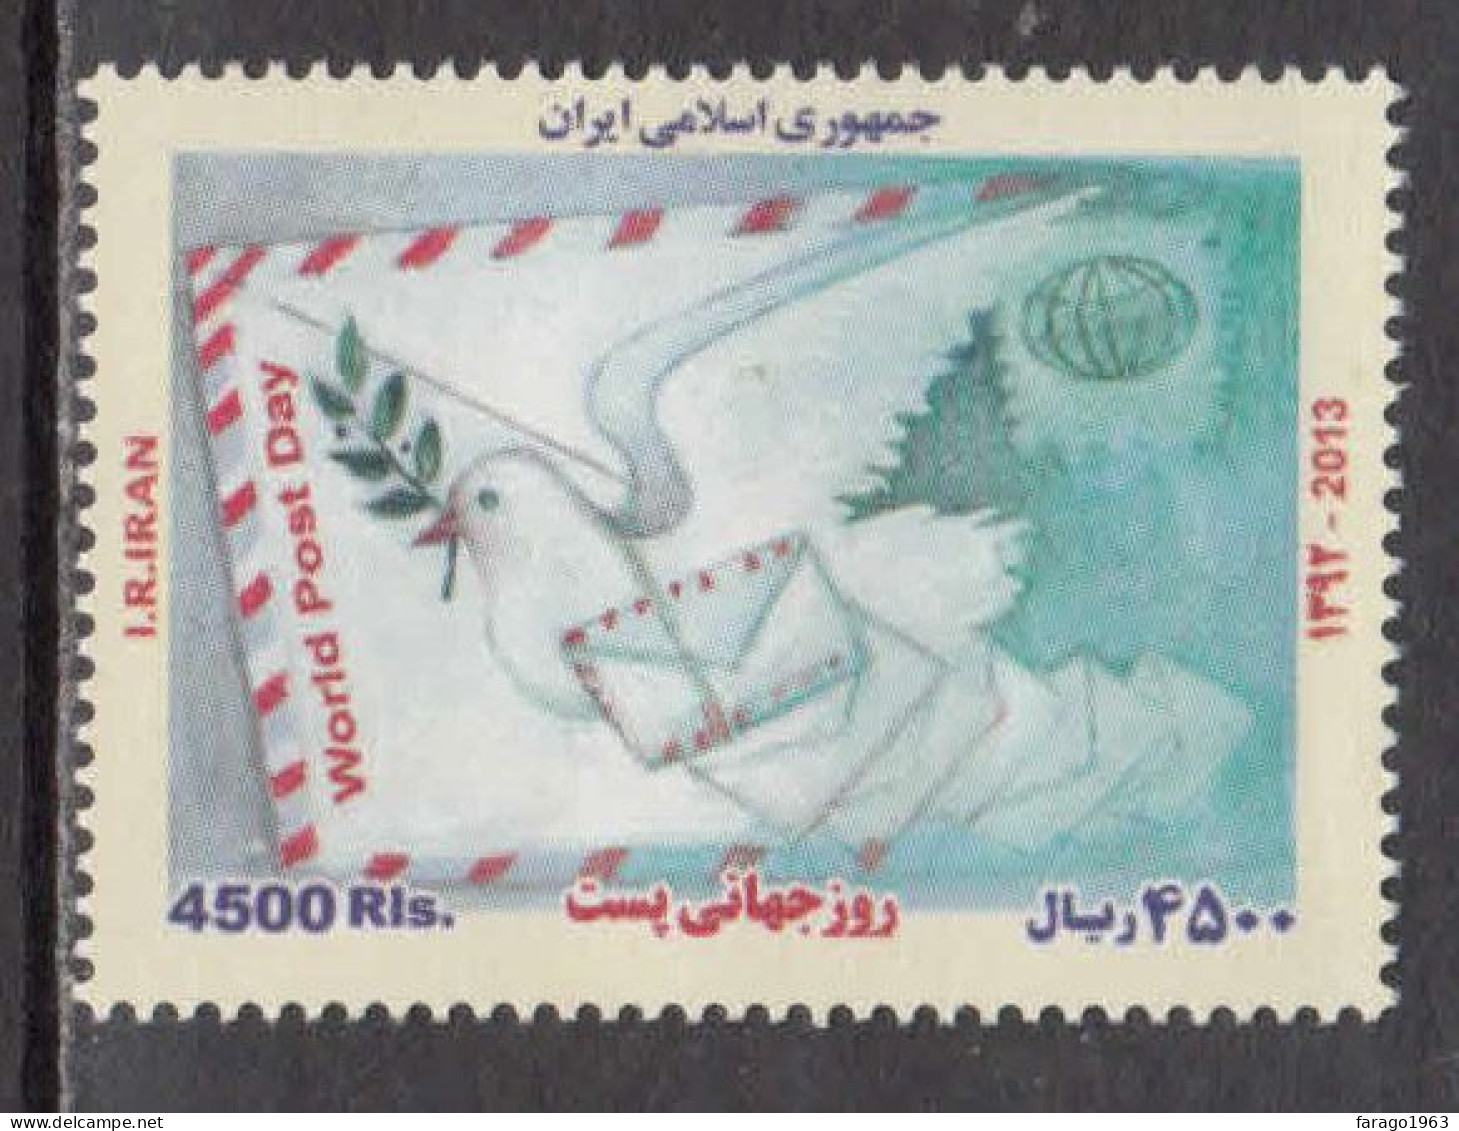 2013 Iran World Post Day Complete Set Of 1 MNH - Iran